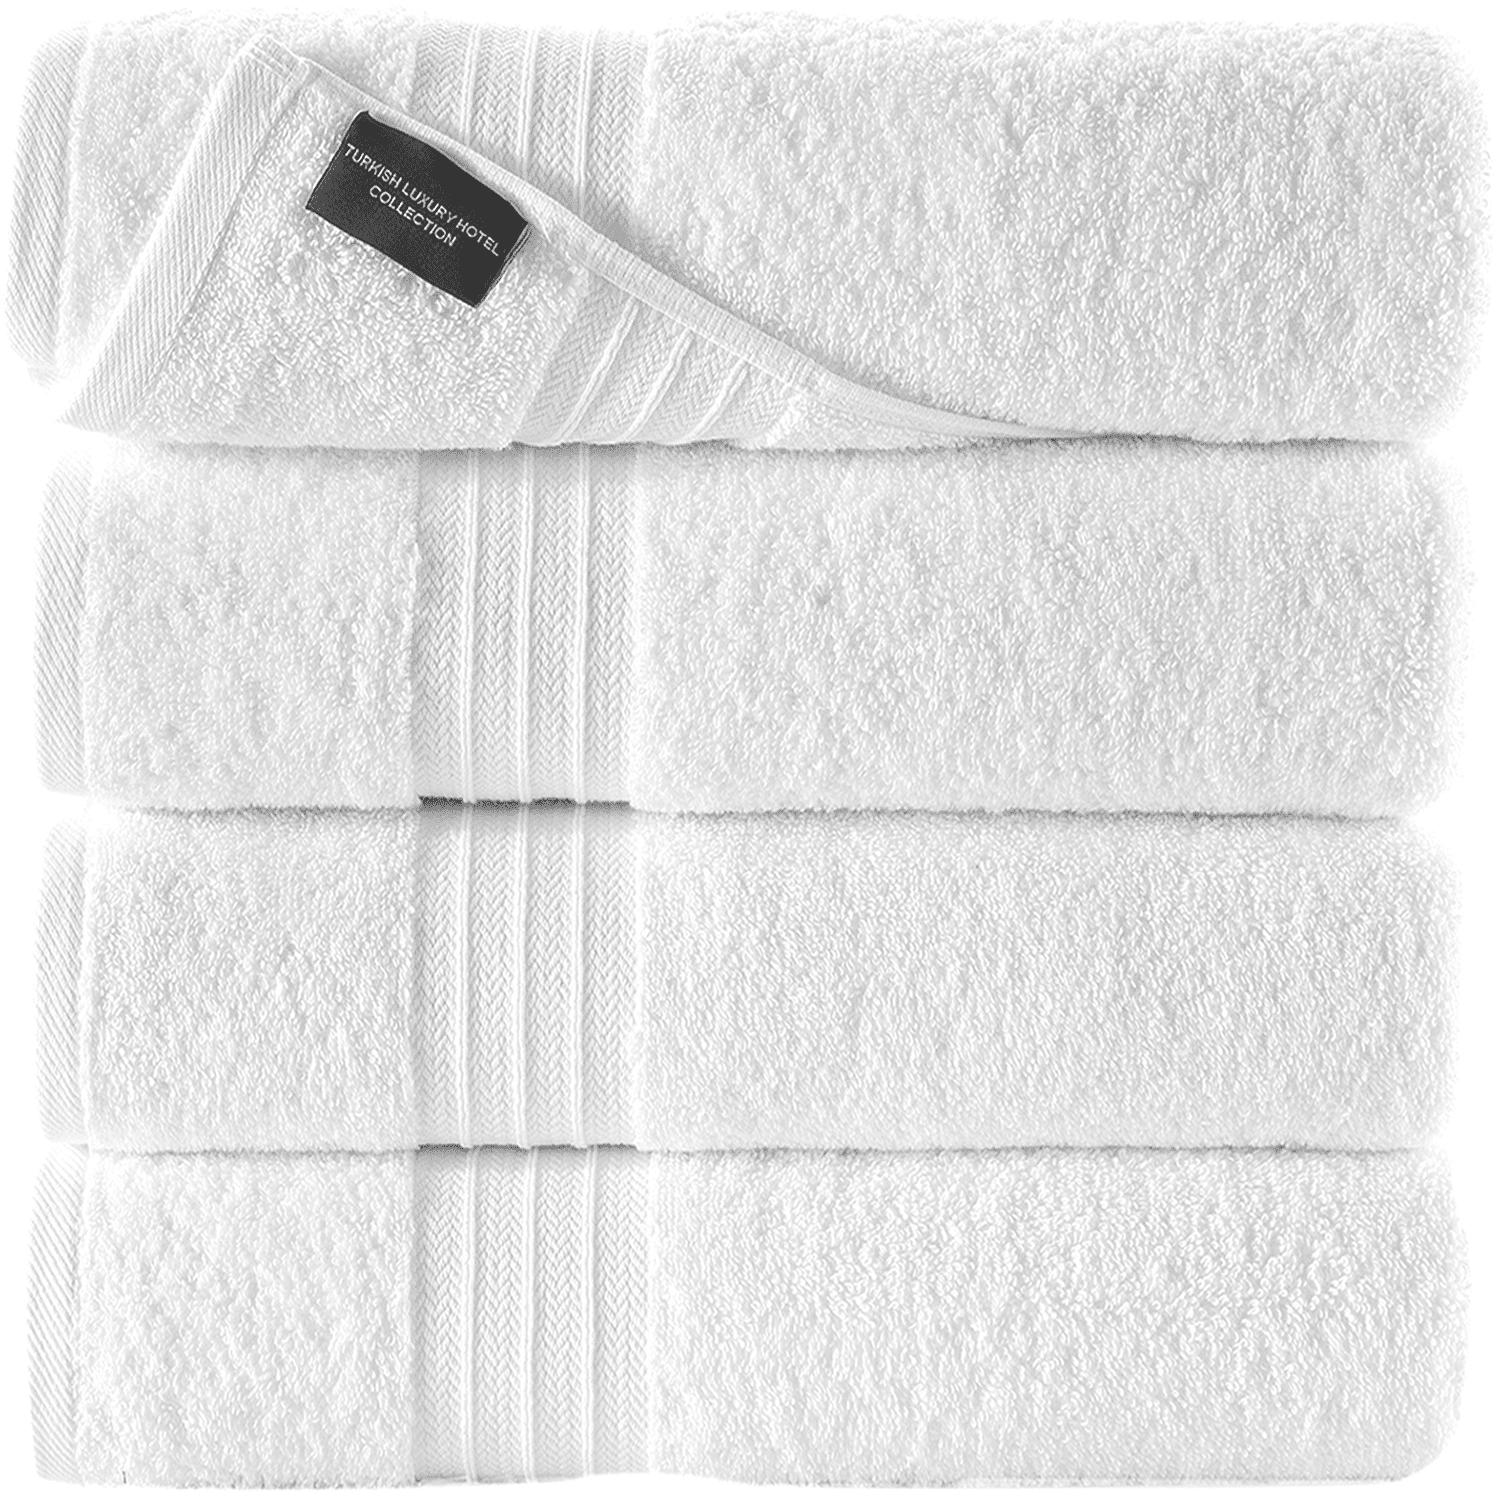 Luxury Turkish Cotton Bath Towel Set - 4-Piece XL Bath Towels (30x56),  Soft, Quick Dry, Absorbent - Beige/Blue, for Bathroom, Spa, Hotel